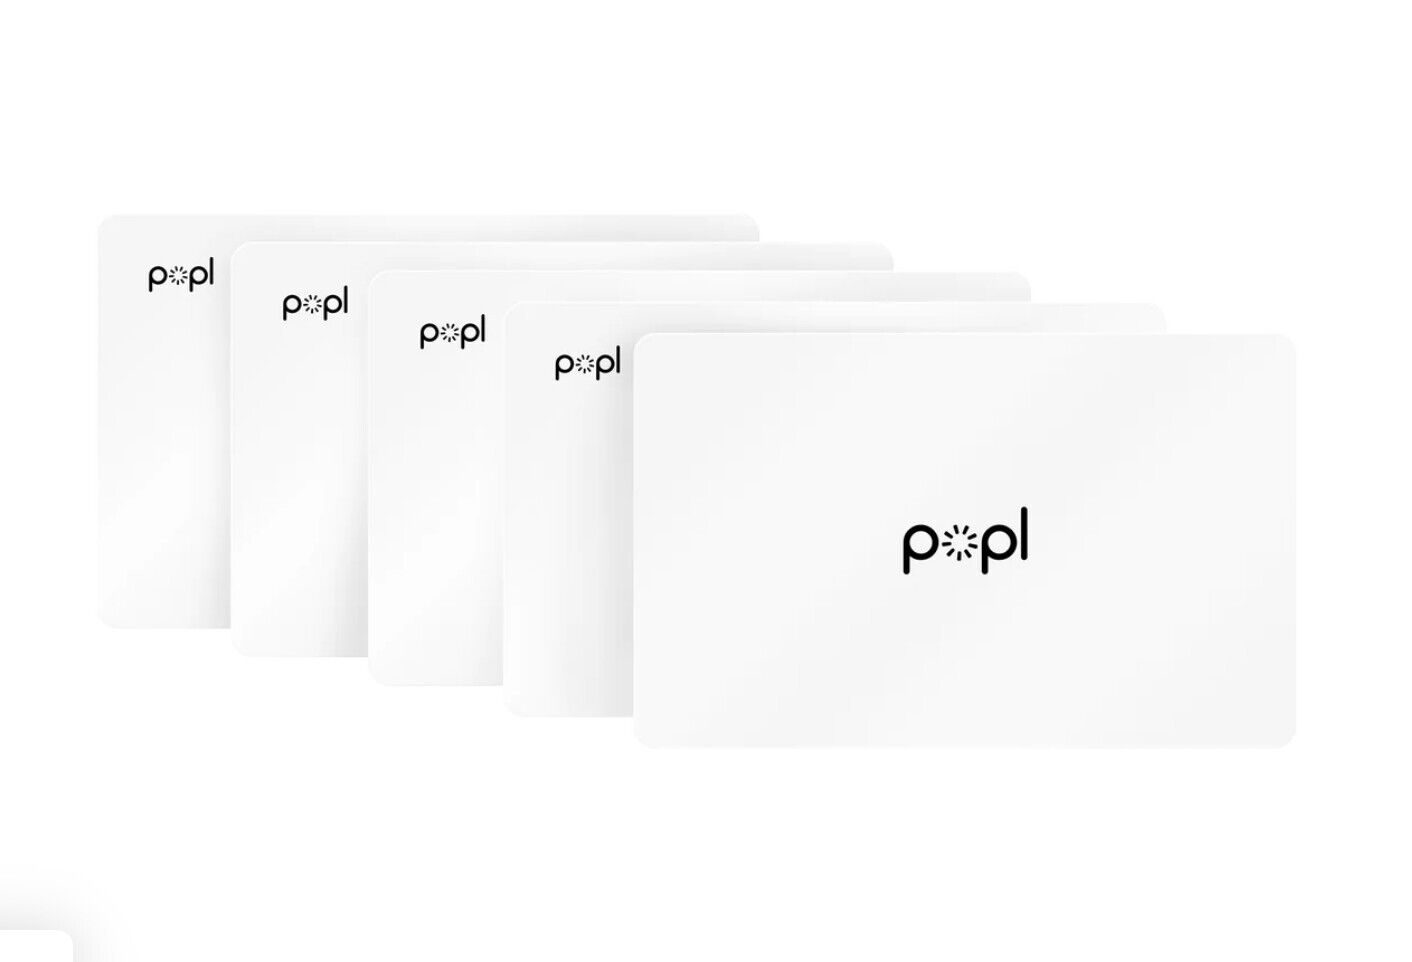 Popl Digital Business Card - Smart NFC Networking Card - Tap to Share Popl - фотография #4